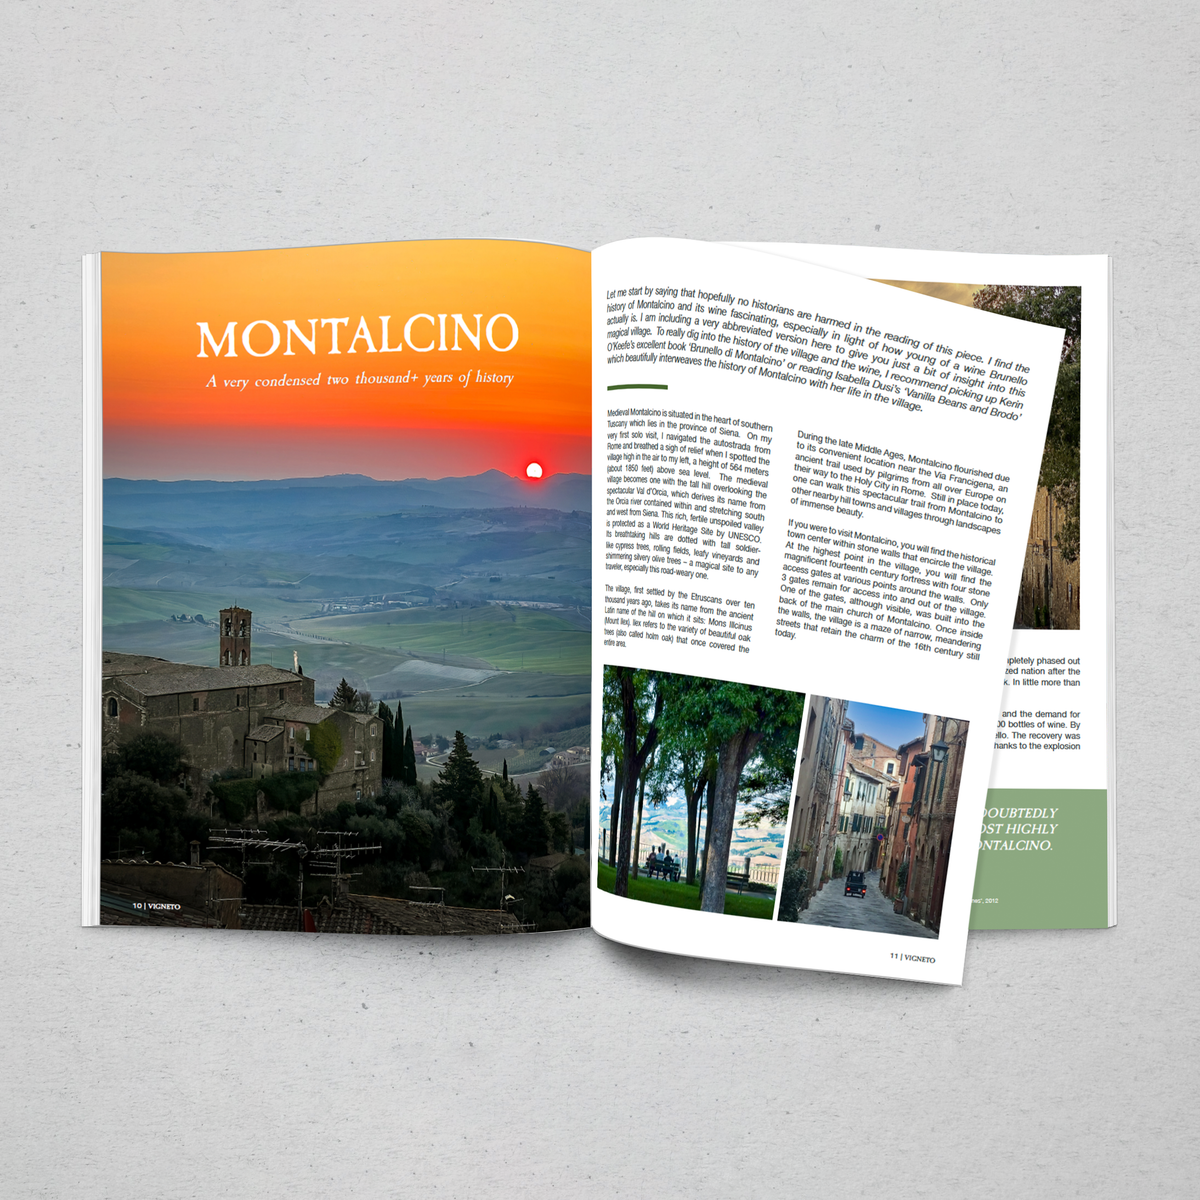 Vigneto - Celebrating the Splendors of Montalcino